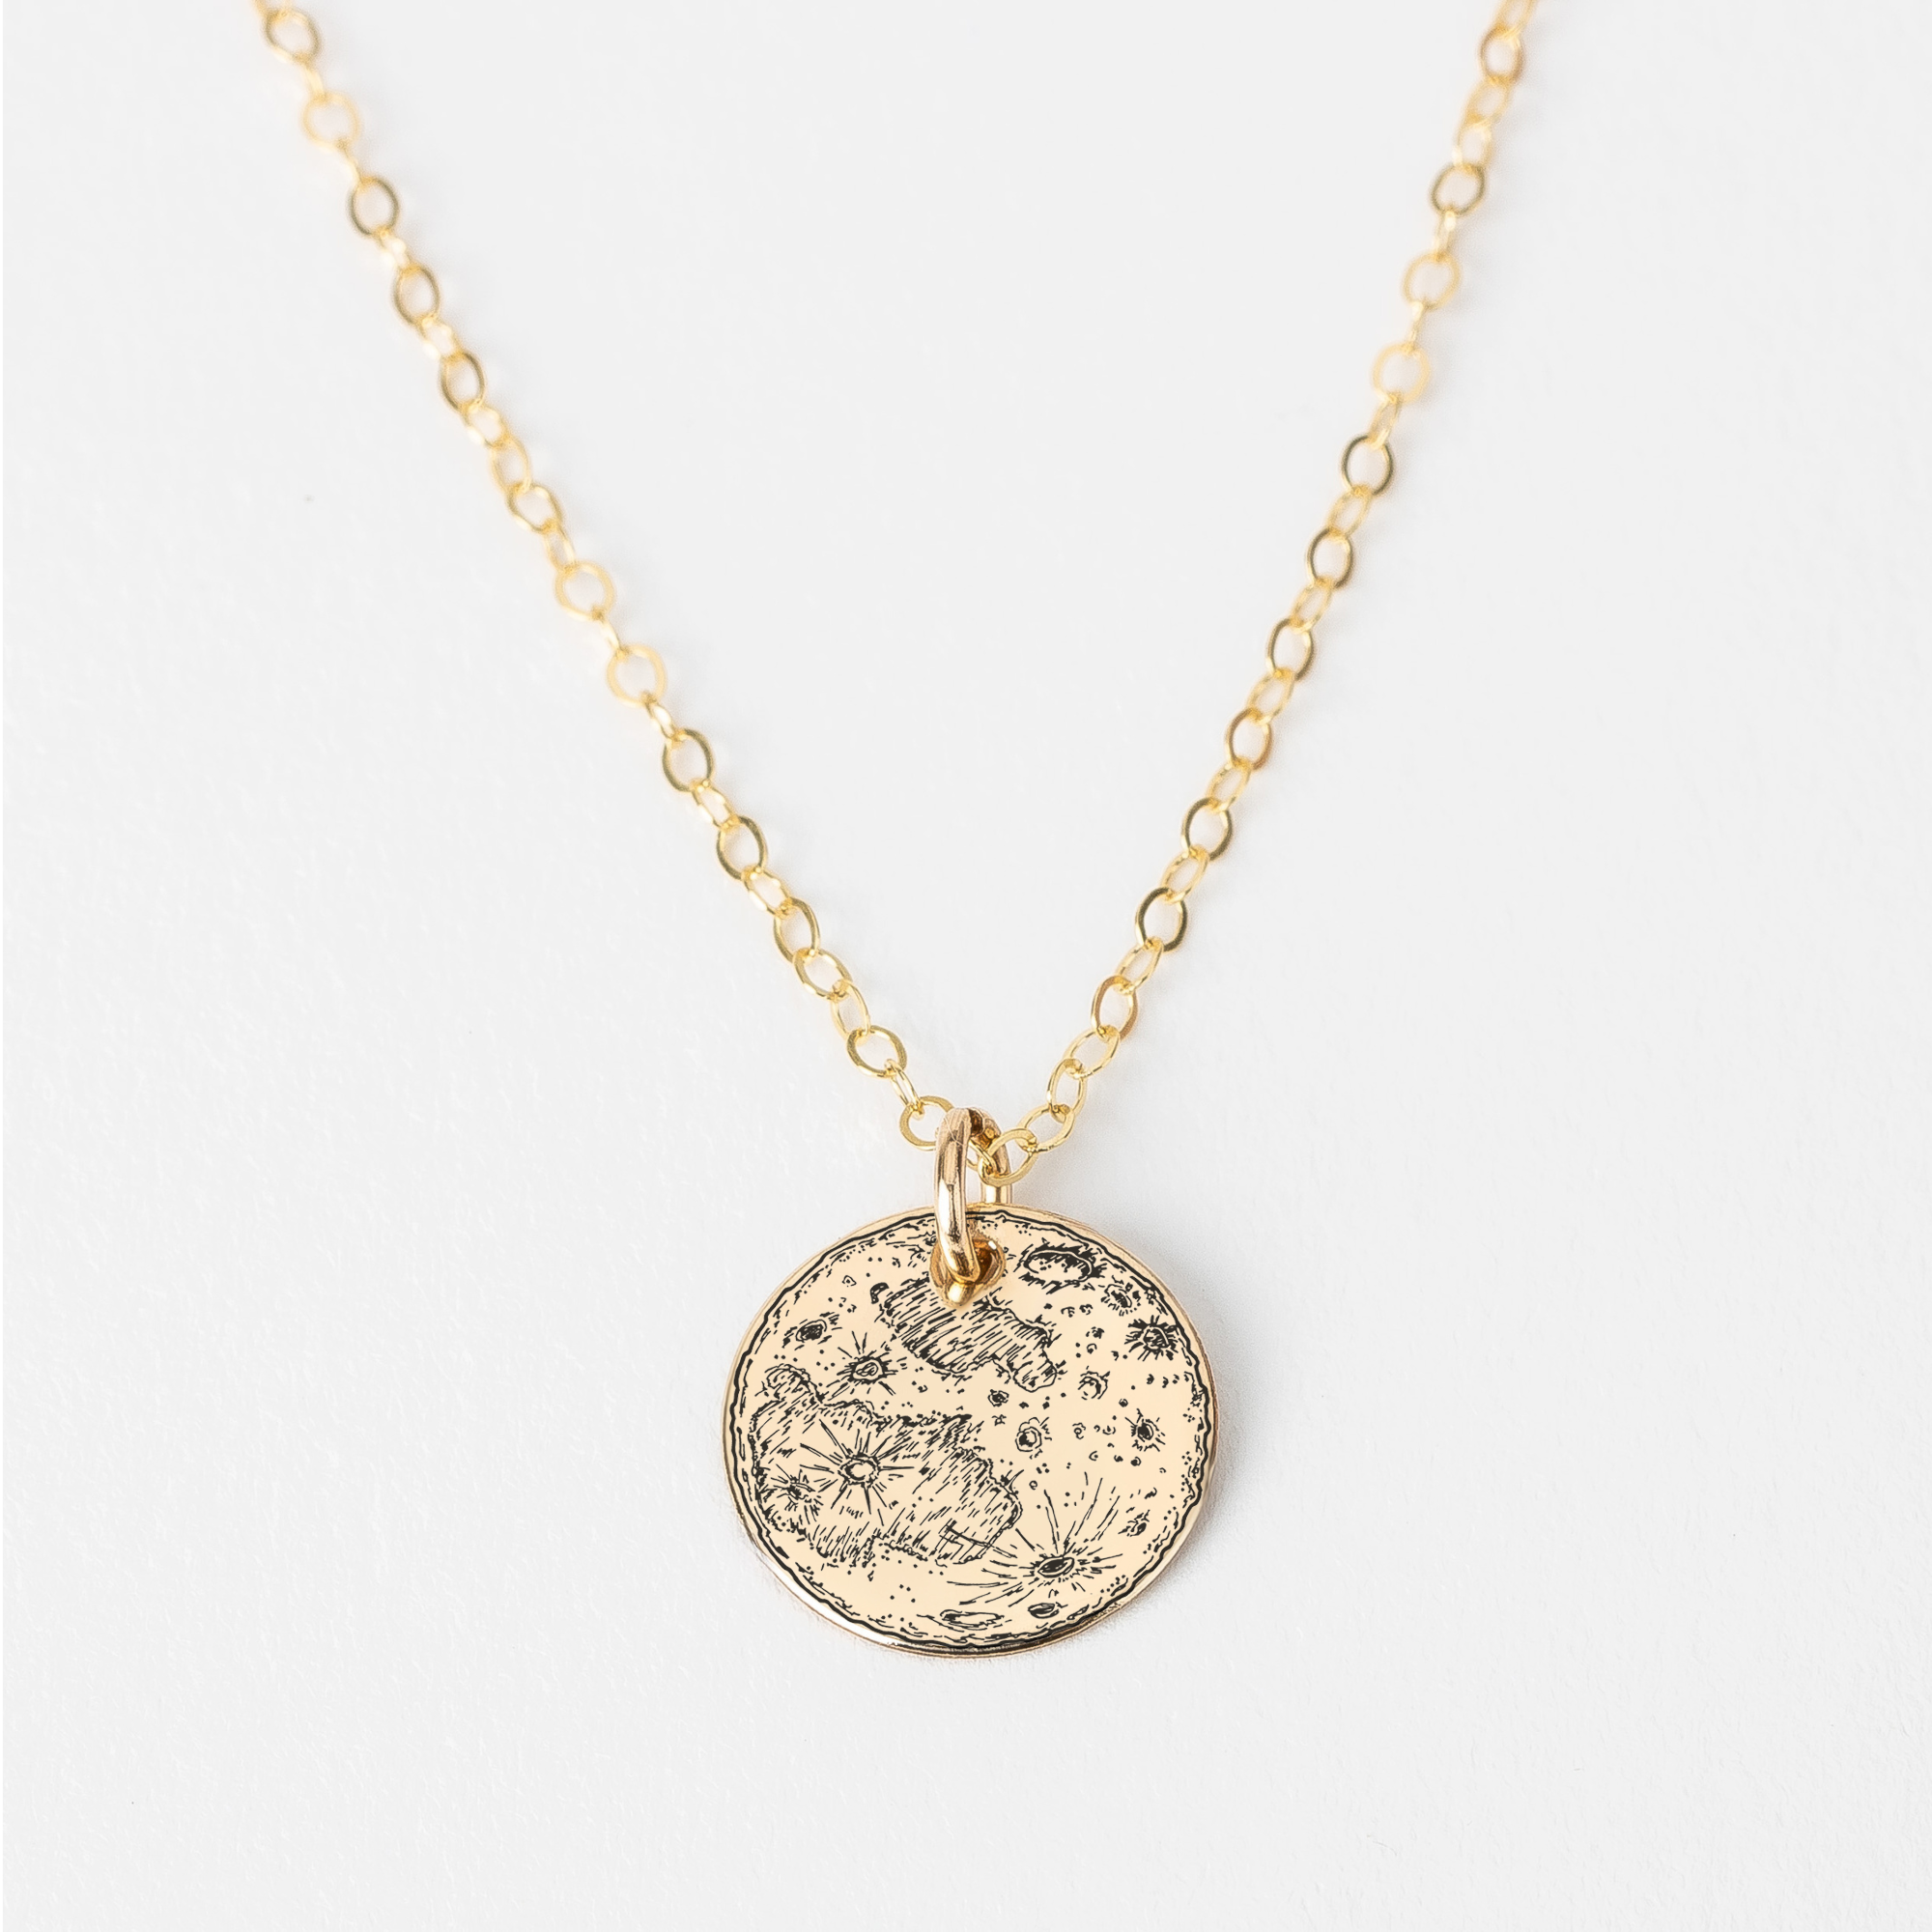 Full Moon Disc Necklace - Melanie Golden Jewelry - _badge_bestseller, _badge_new, bestseller, celestial, charm necklaces, disc necklaces, mystic, necklaces, new, pendant necklaces